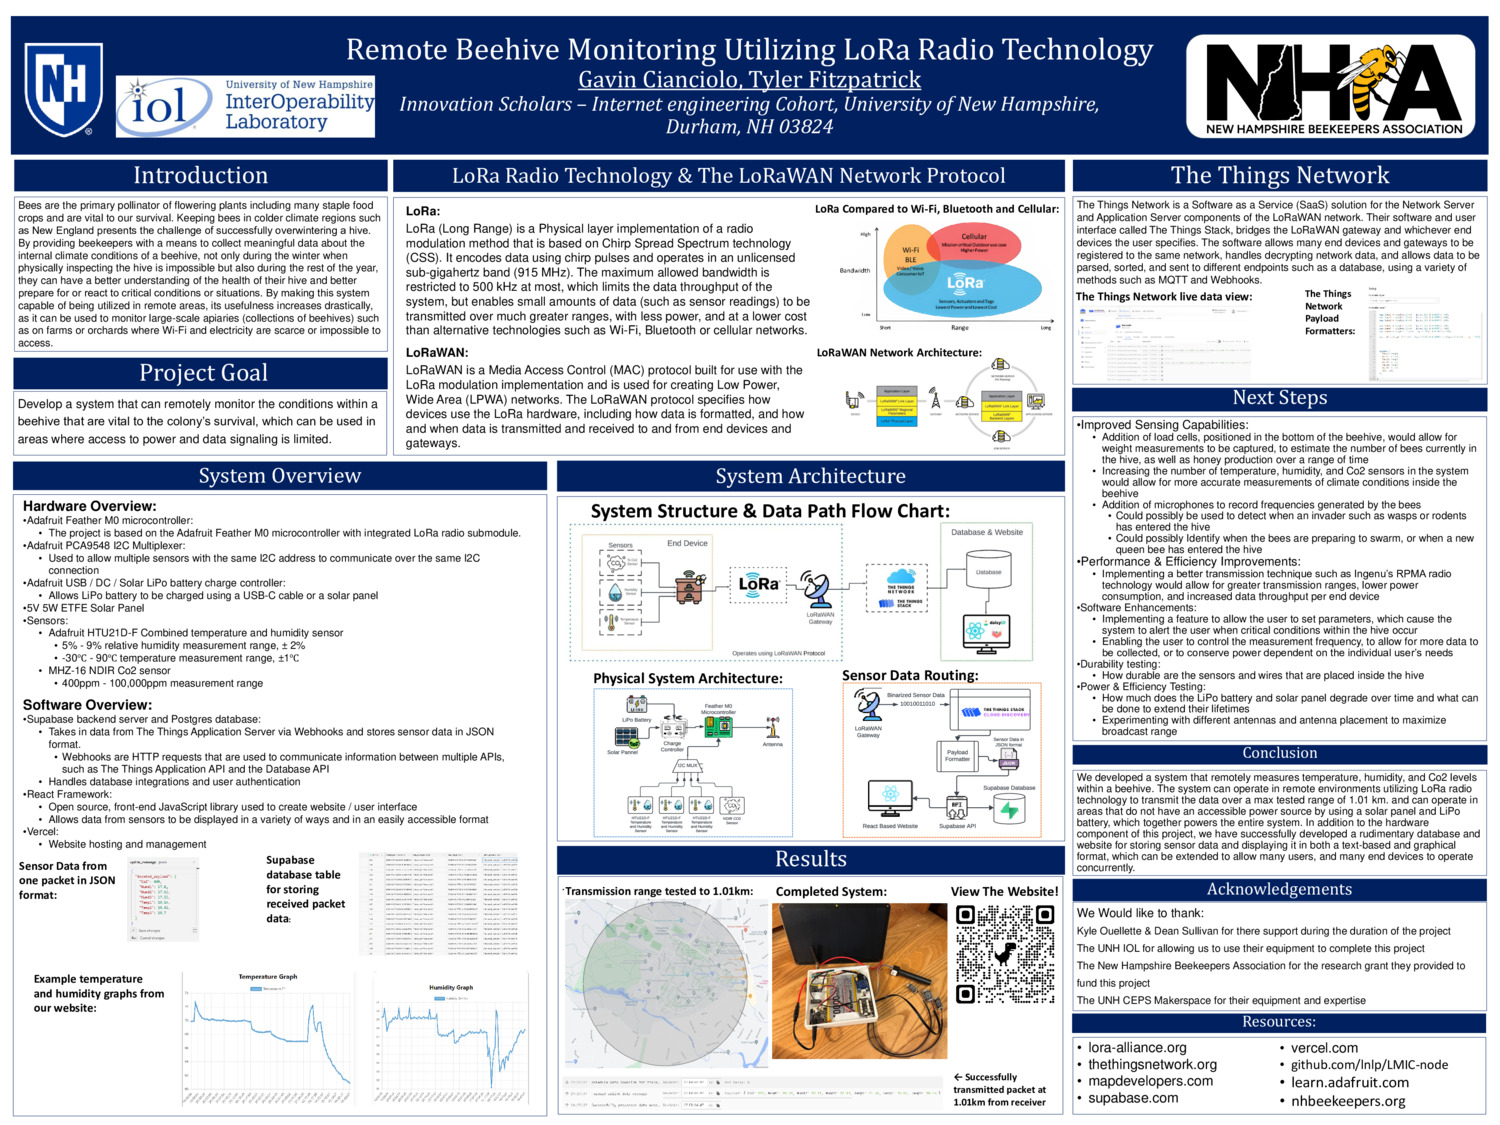 Remote Beehive Monitoring Utilizing Lora Radio Technology by gcc1033